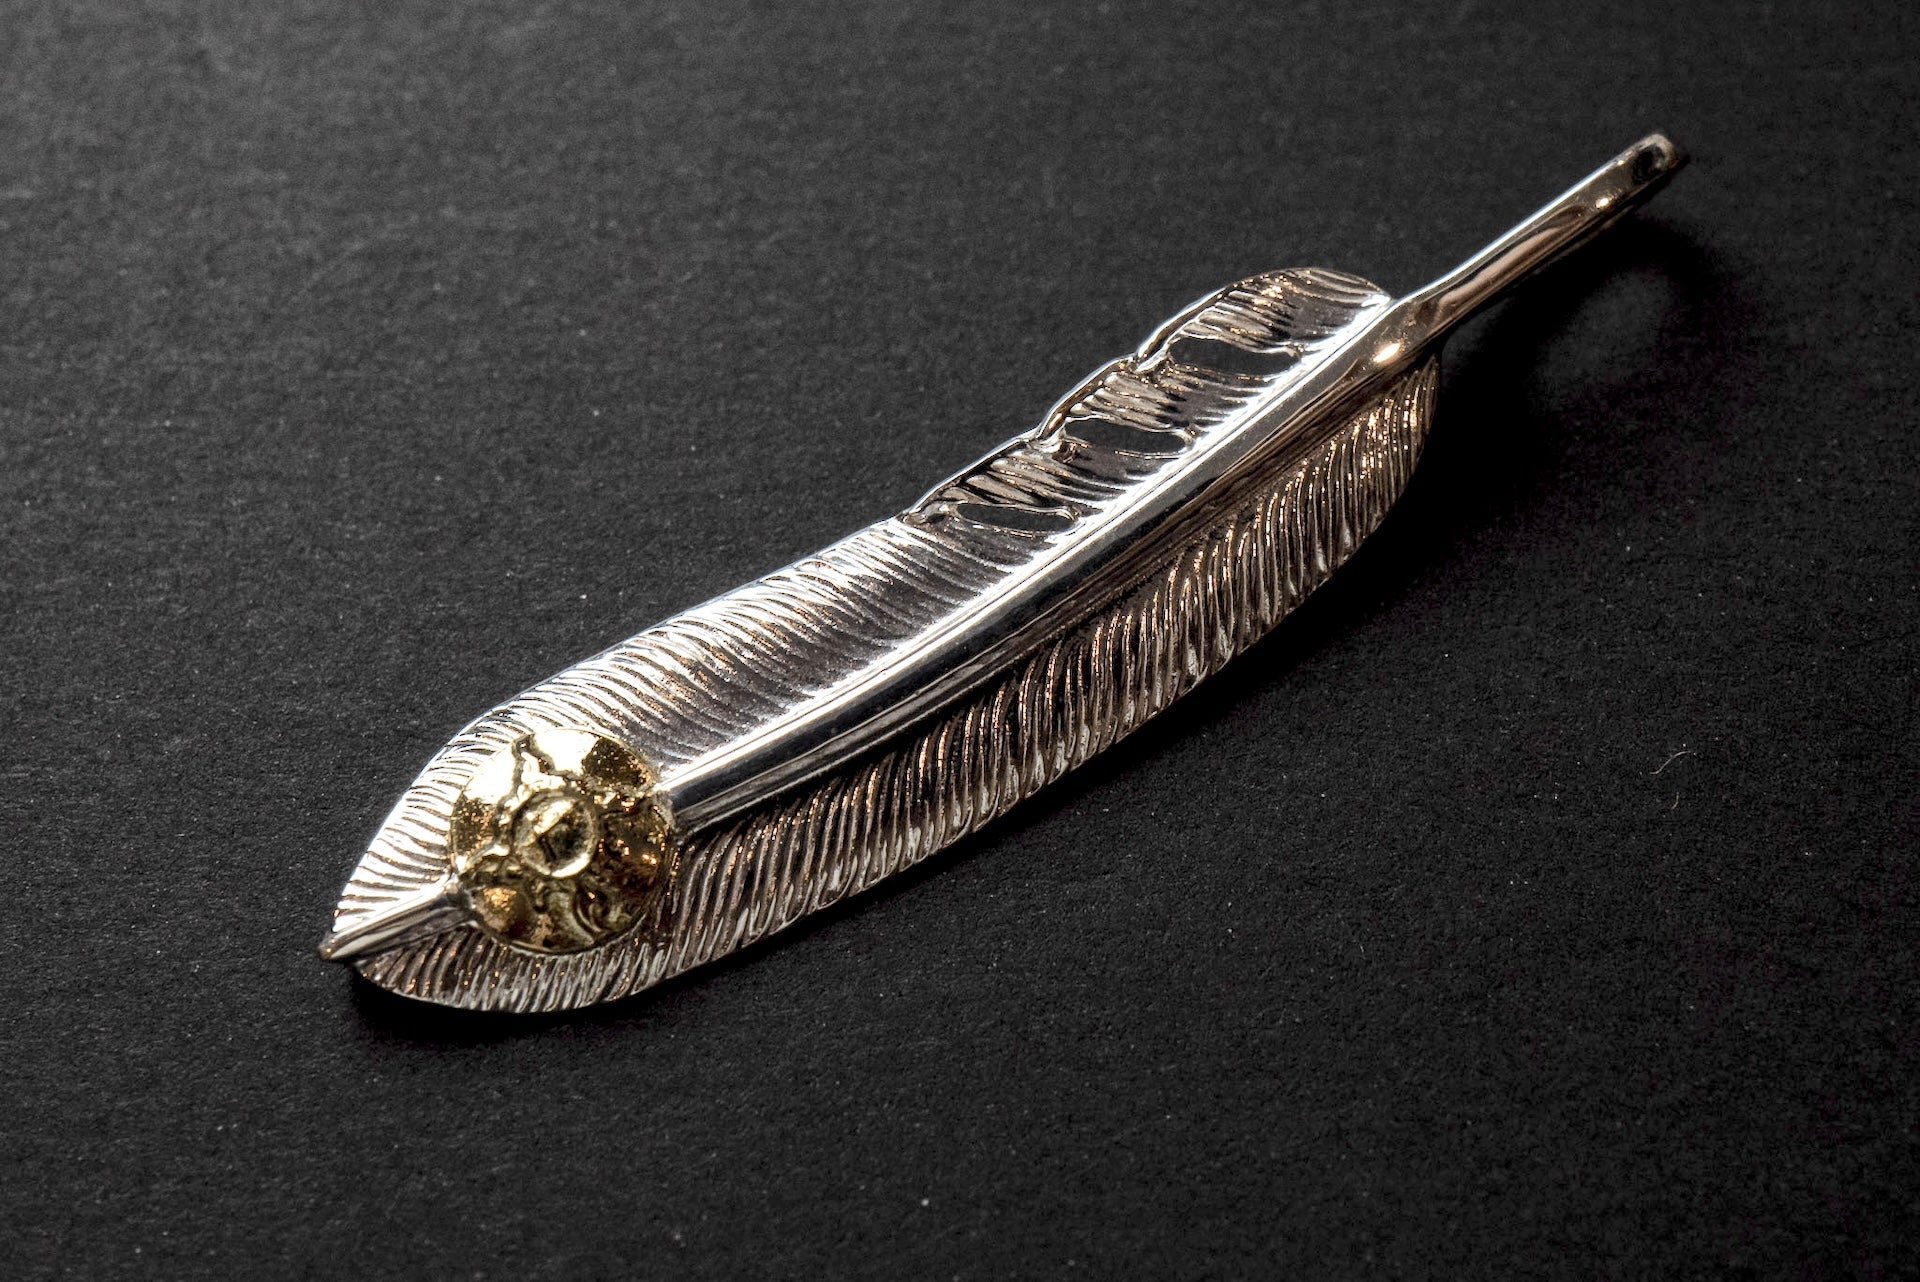 First Arrow's 18K Gold Sunburst Emblem "Medium Feather" Silver Pendant (P-520)